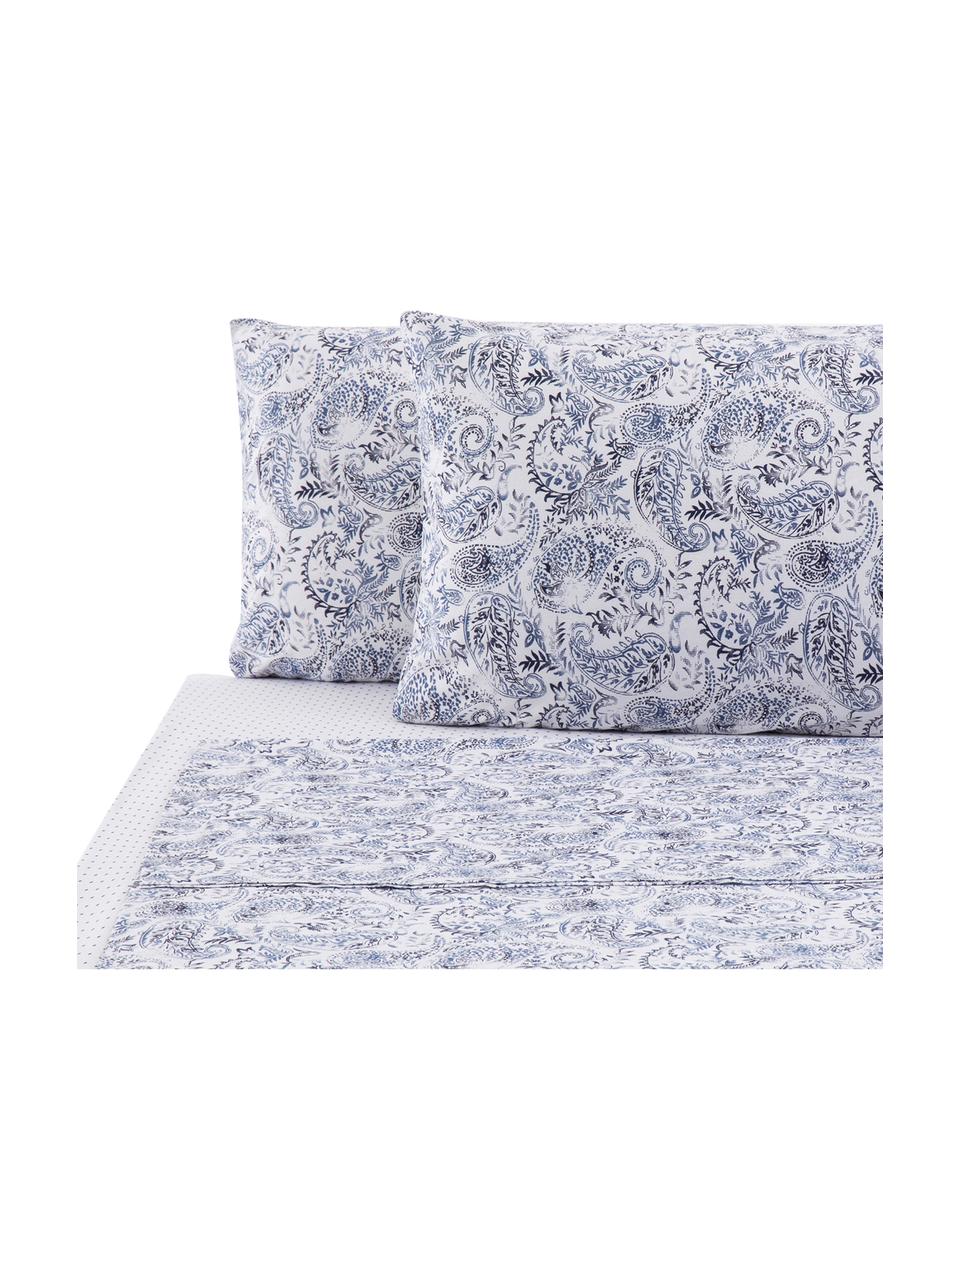 Set lenzuola in cotone Yumi, Tessuto: Renforcé Renforcé è reali, Blu, bianco, 290 x 240 cm + 2 federe + 1 lenzuolo con angoli